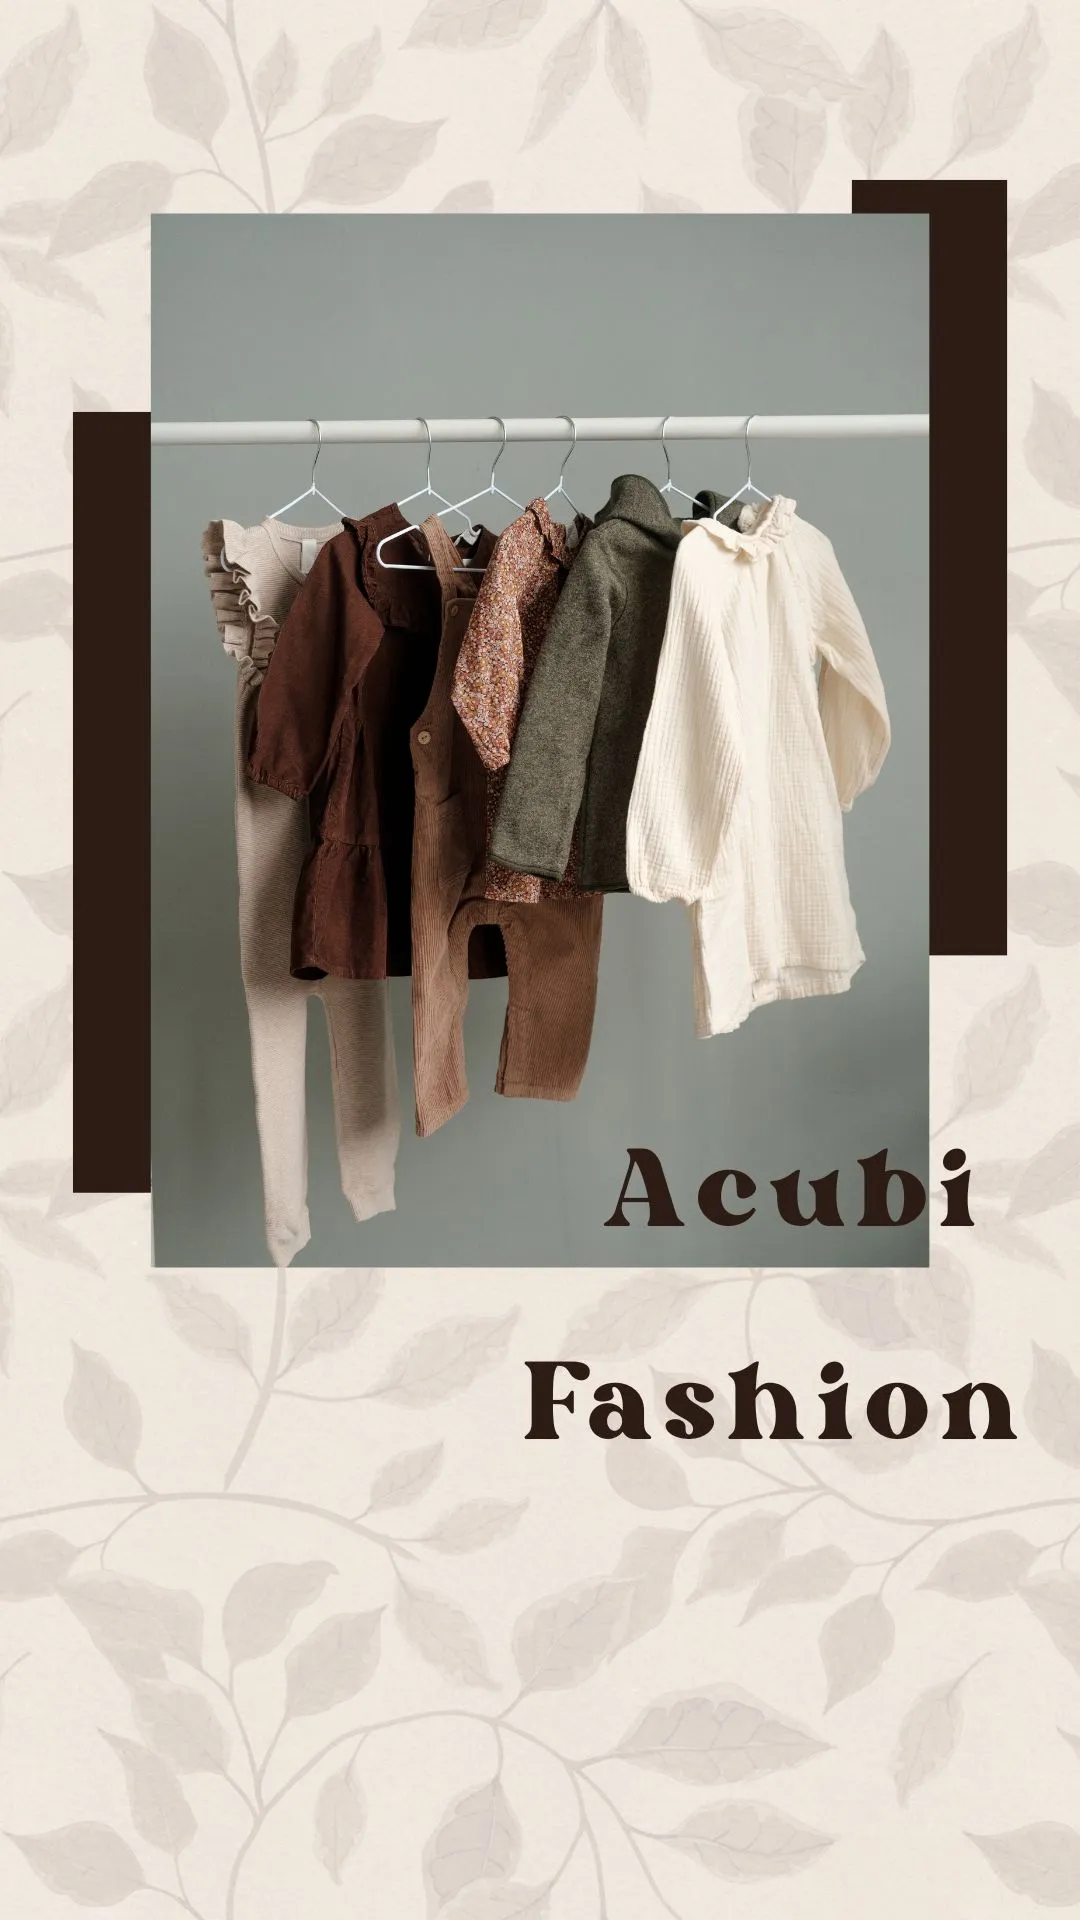 Acubi Fashion